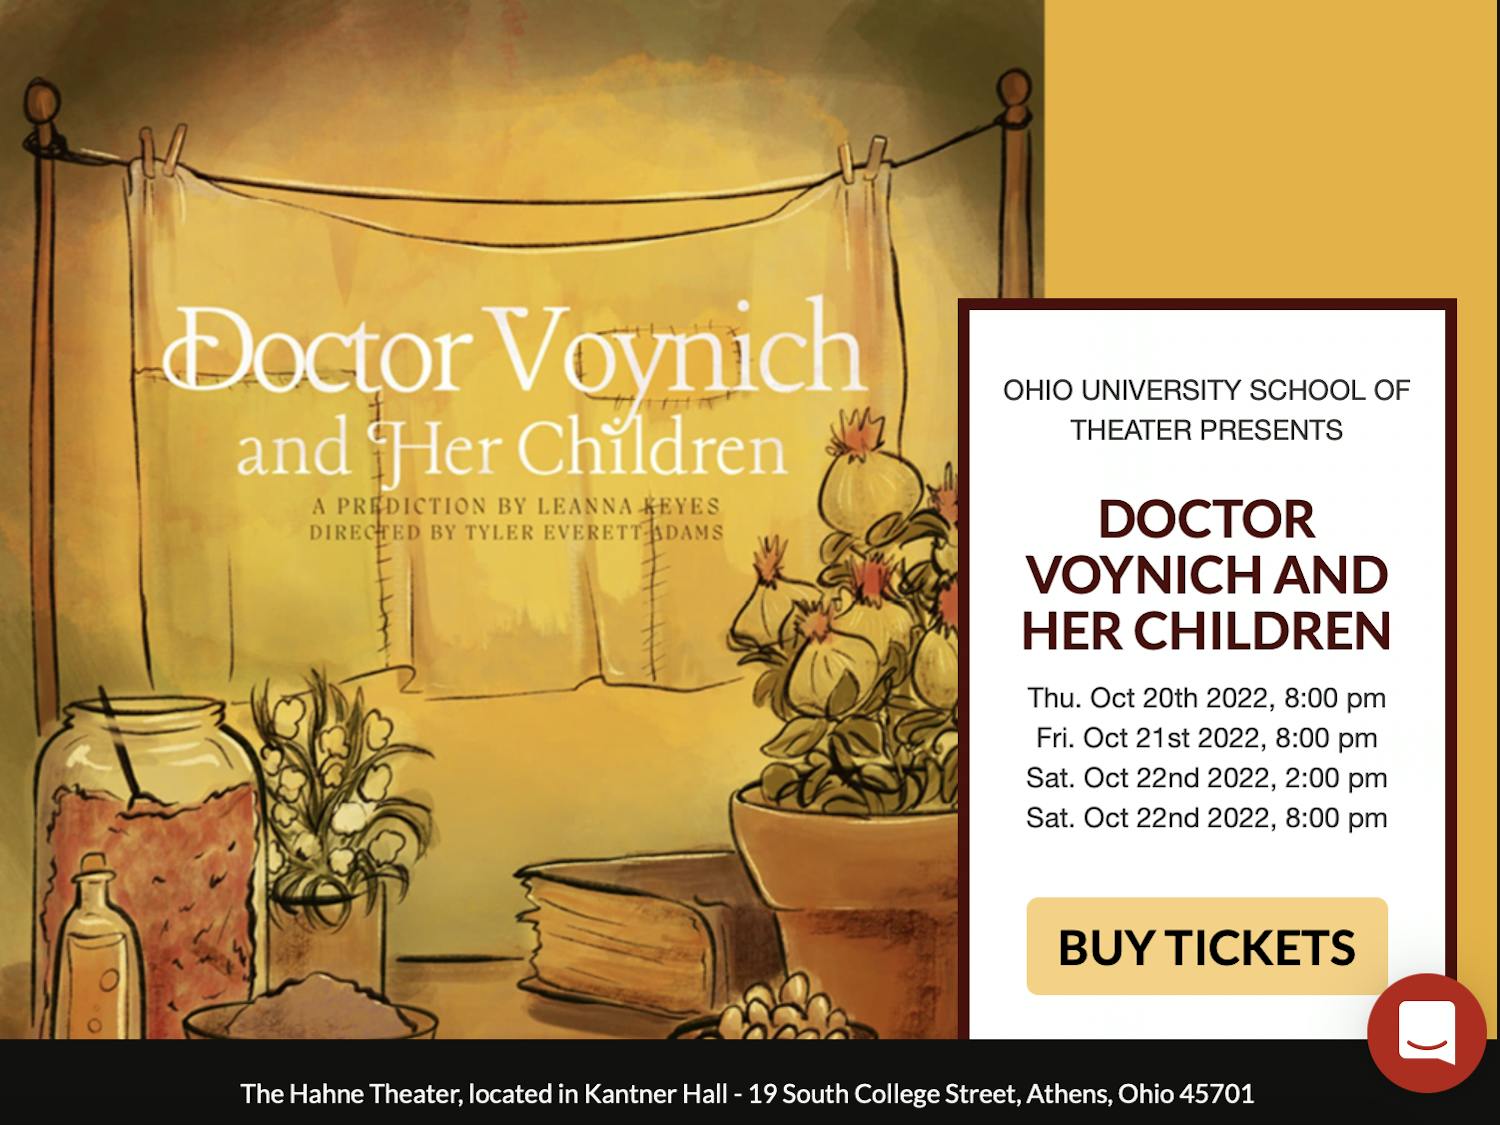 dr. voynich provided